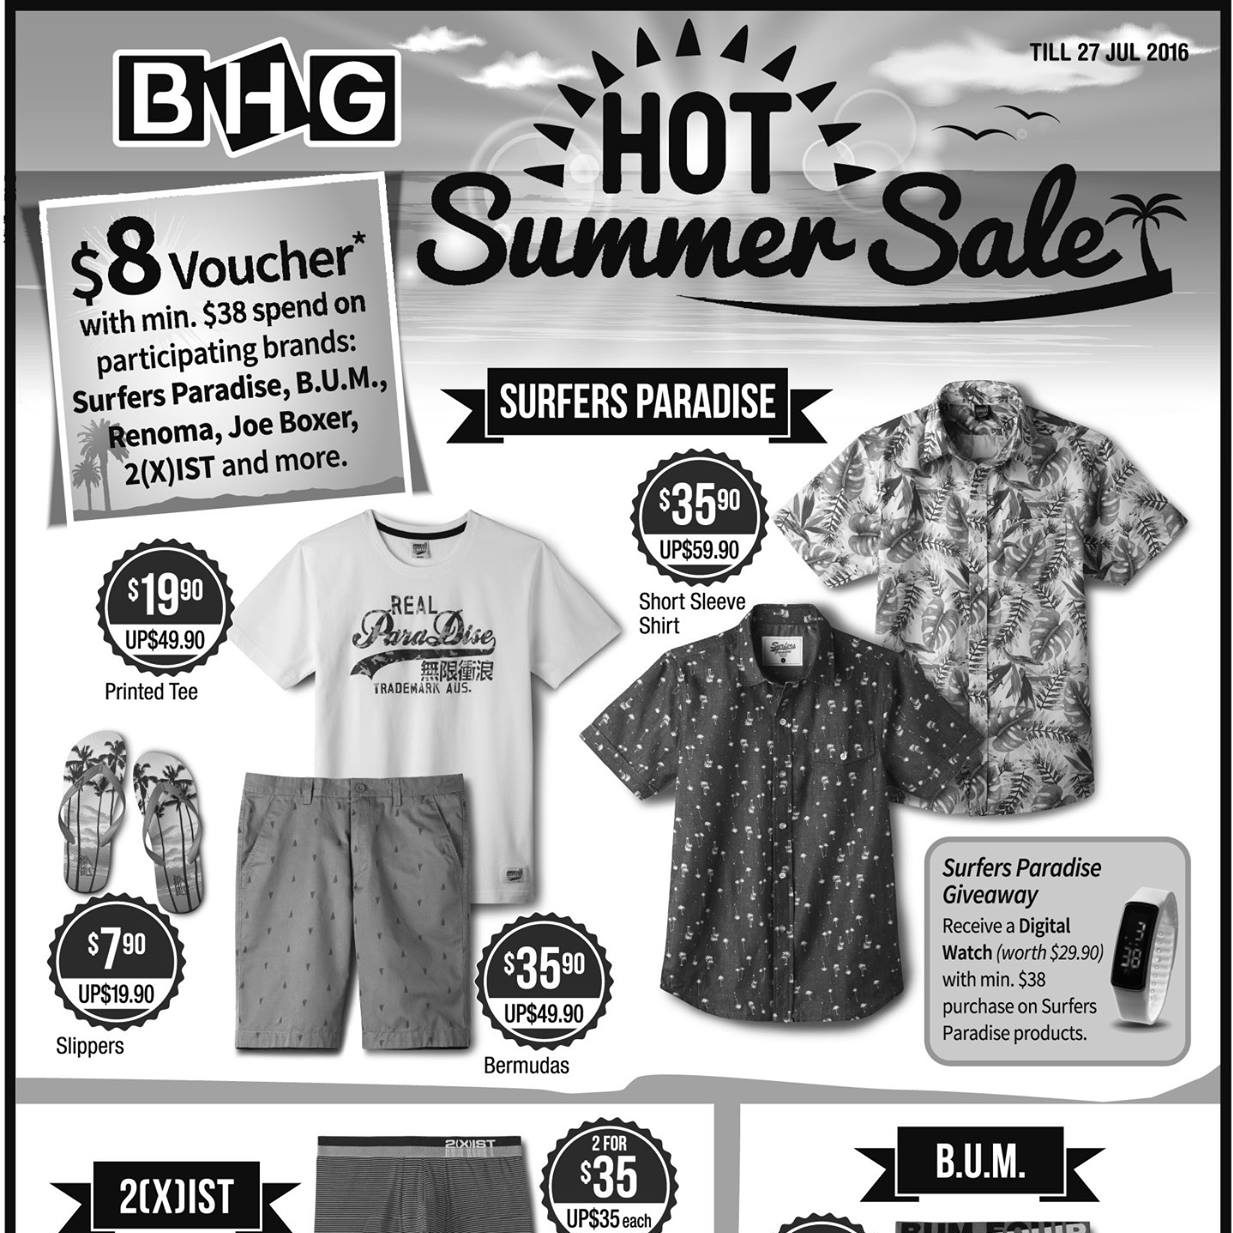 BHG Menswear Summer Sale Singapore Promotion ends 27 Jul 2016